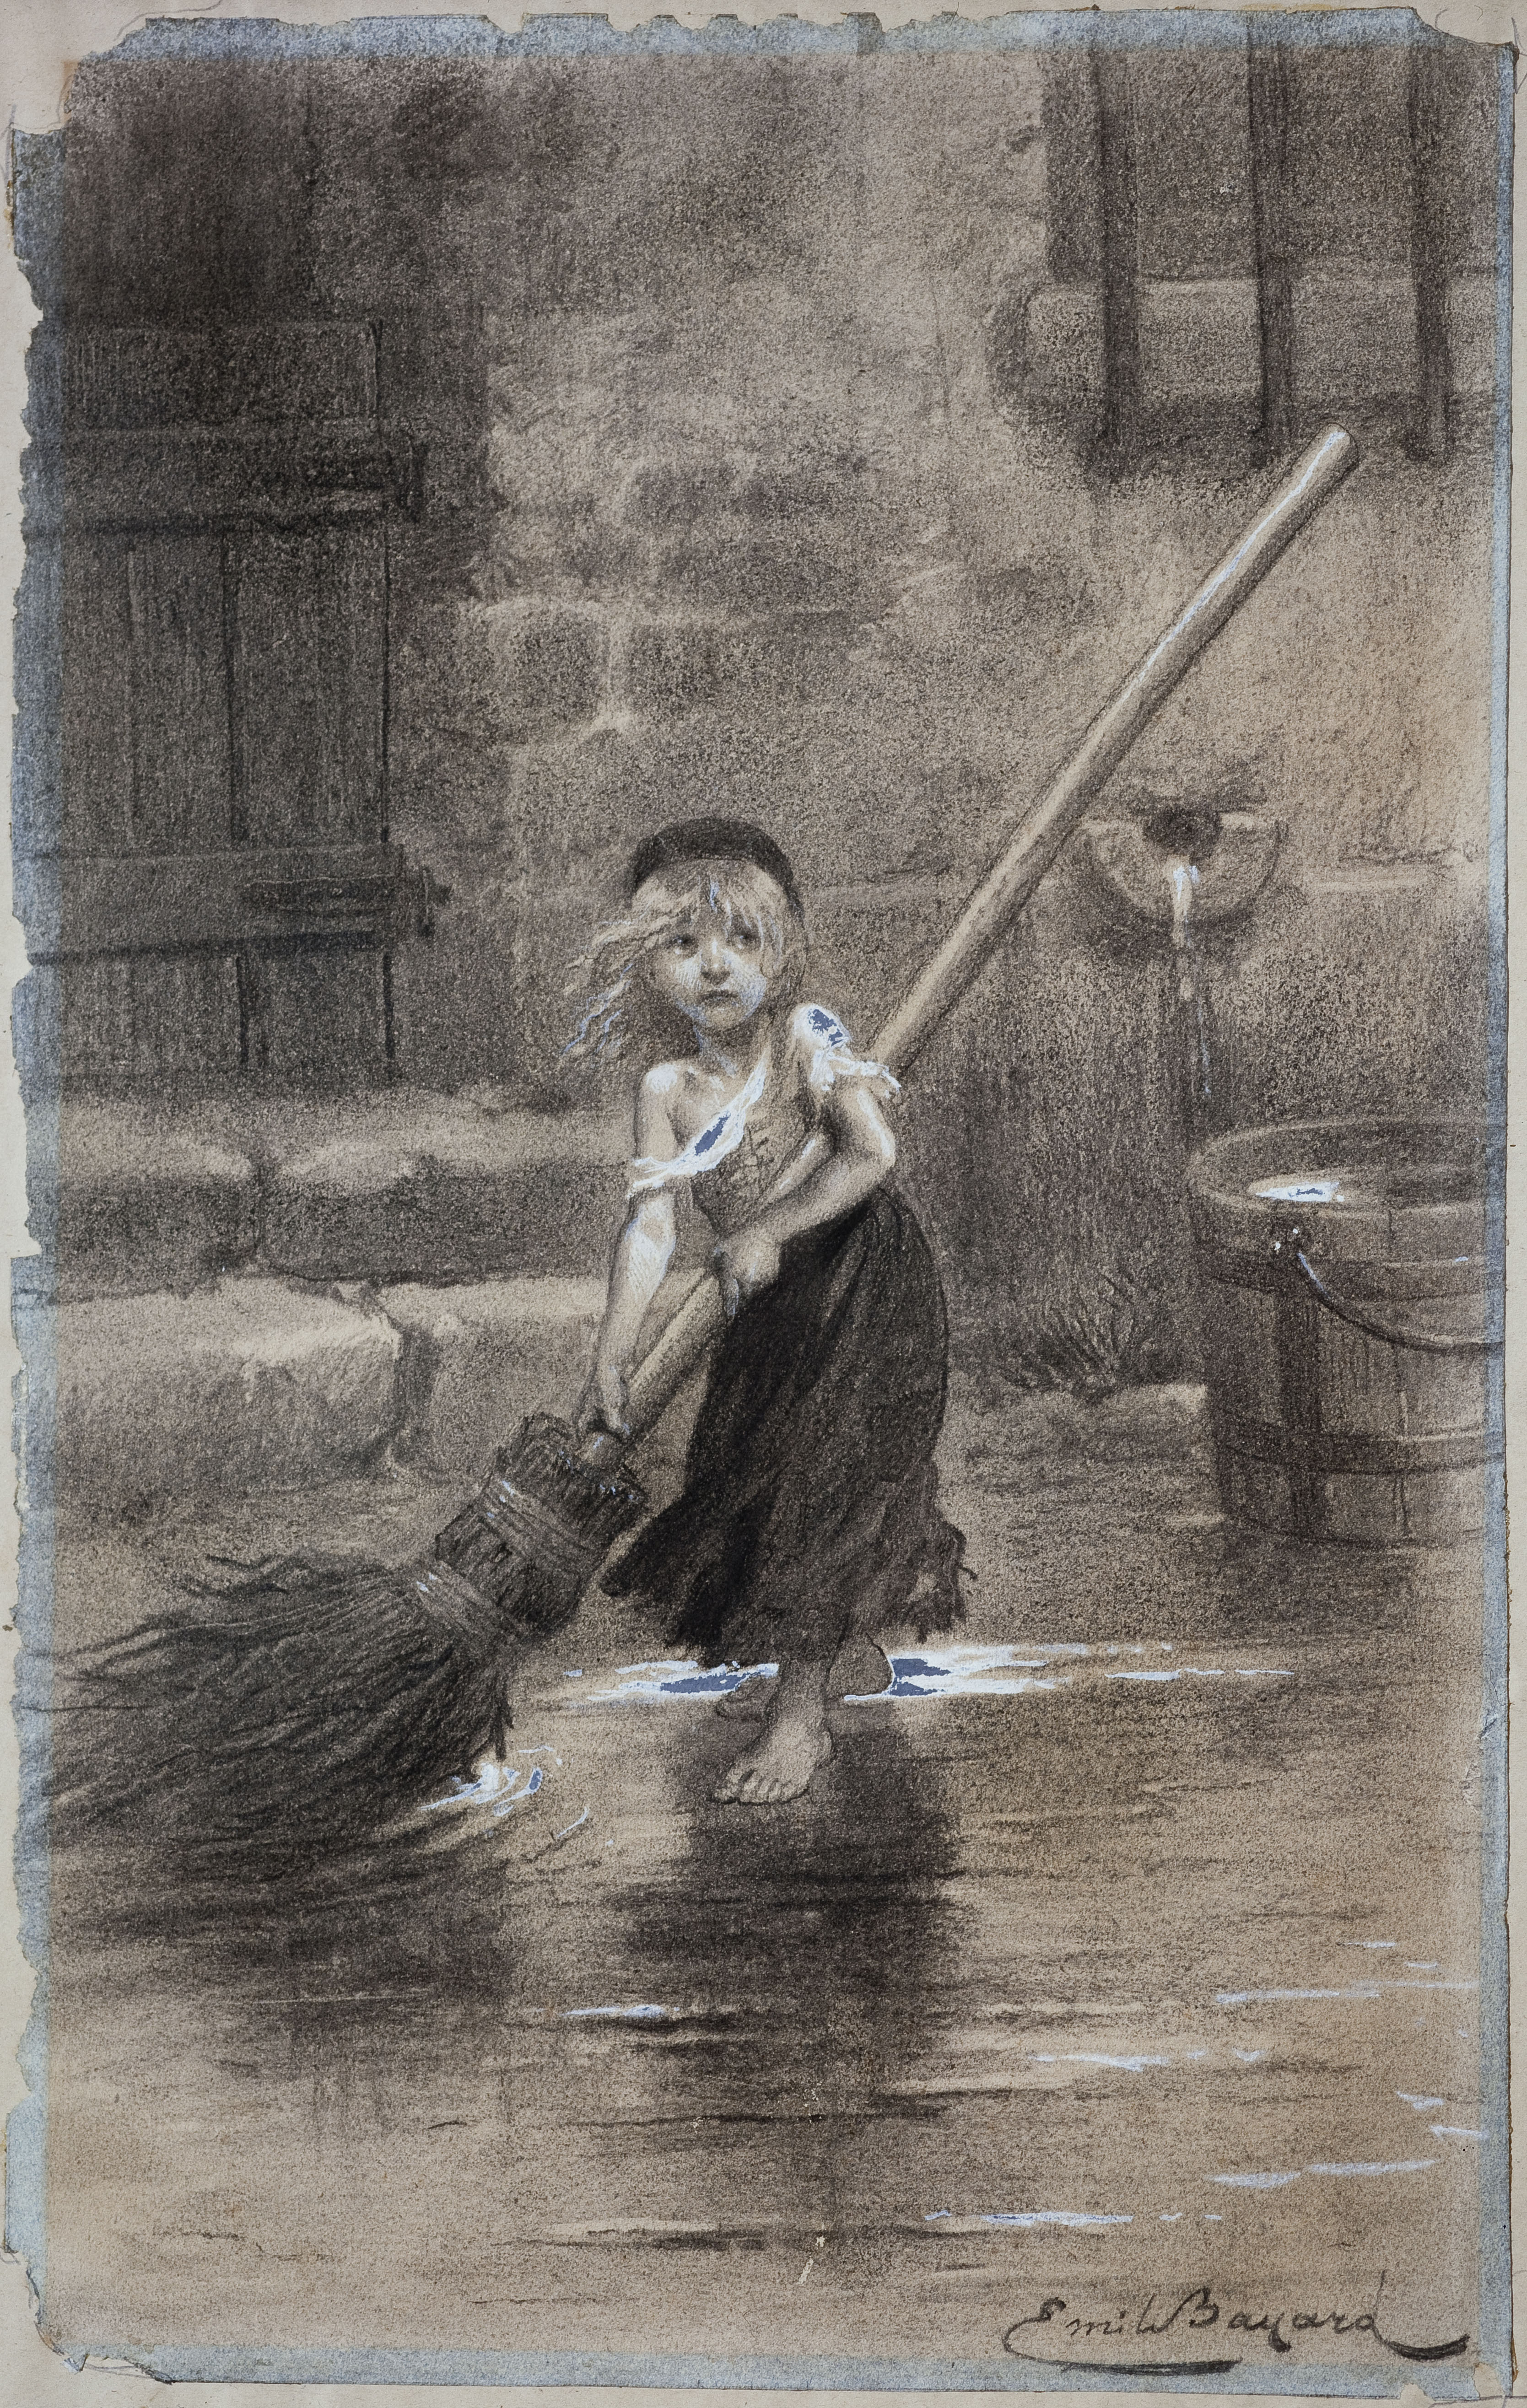 http://upload.wikimedia.org/wikipedia/commons/4/40/Cosette-sweeping-les-miserables-emile-bayard-1862.jpg